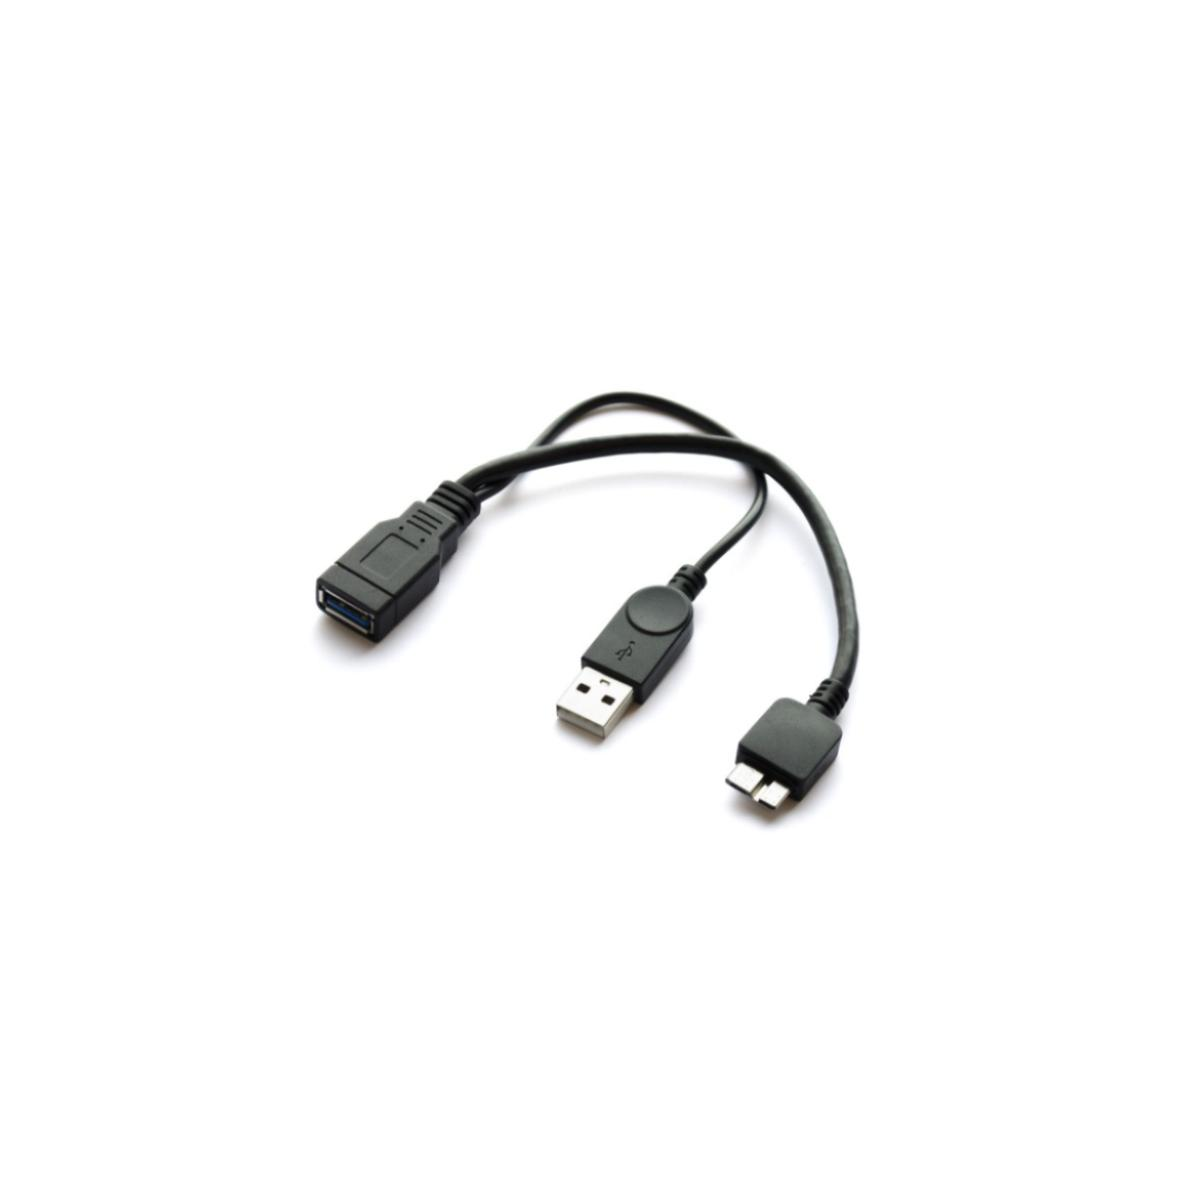 OPT-UP-CABLE-USB-001 AAEON USB Kabel, Schwarz